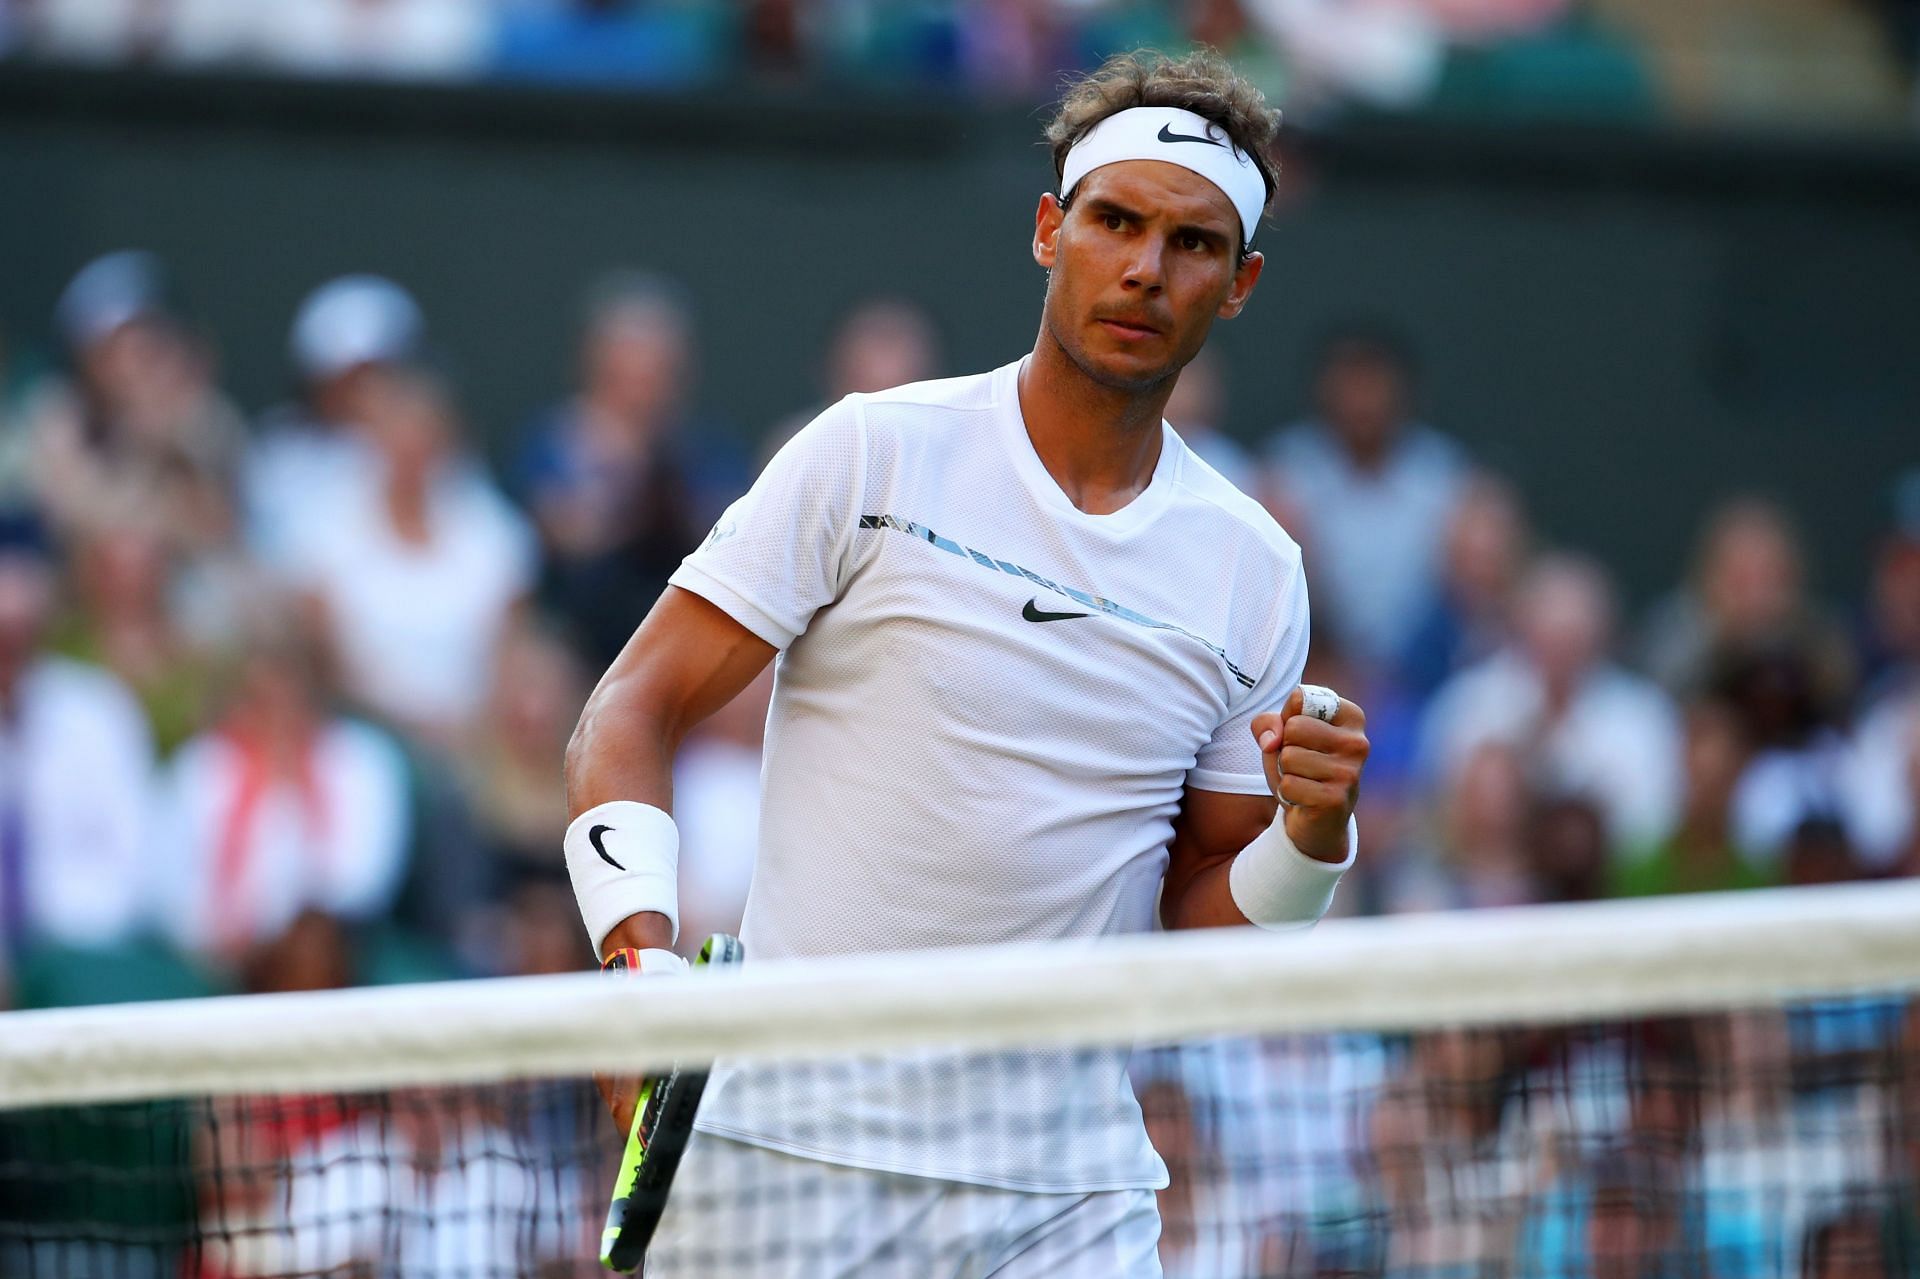 Rafael Nadal will aim for his 23rd Major title at Wimbledon